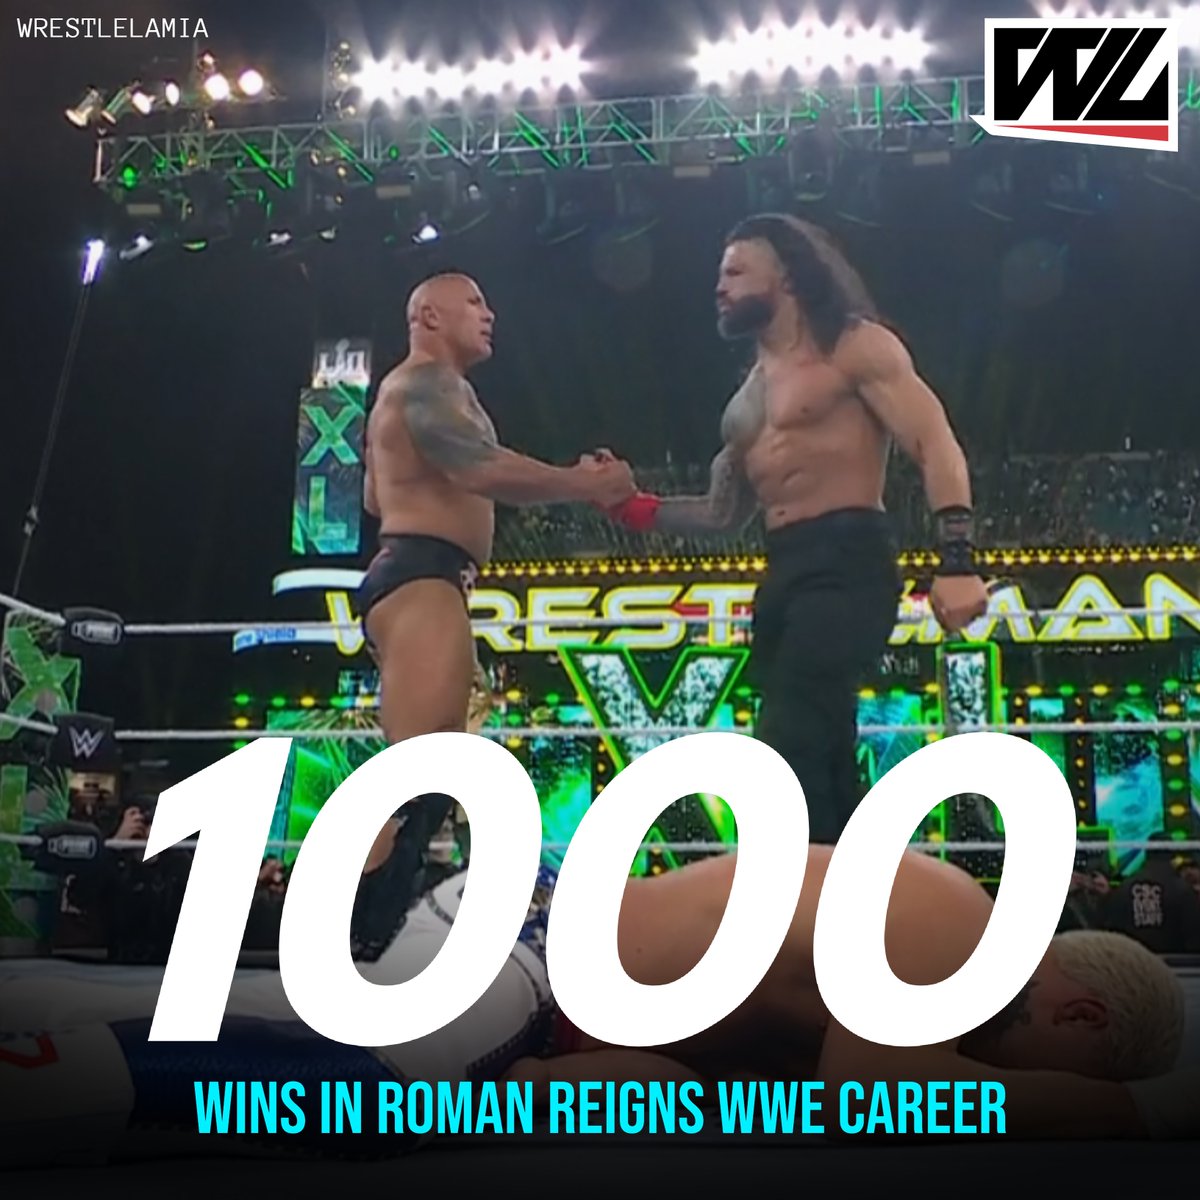 Last Night Roman Reigns Marked His 1000th Victory In WWE Career.
#WrestleMania #WrestleManiaXL #WrestleMania40 #RomanReigns #TheBloodline #TheHeadOfTheTable #TribalChief